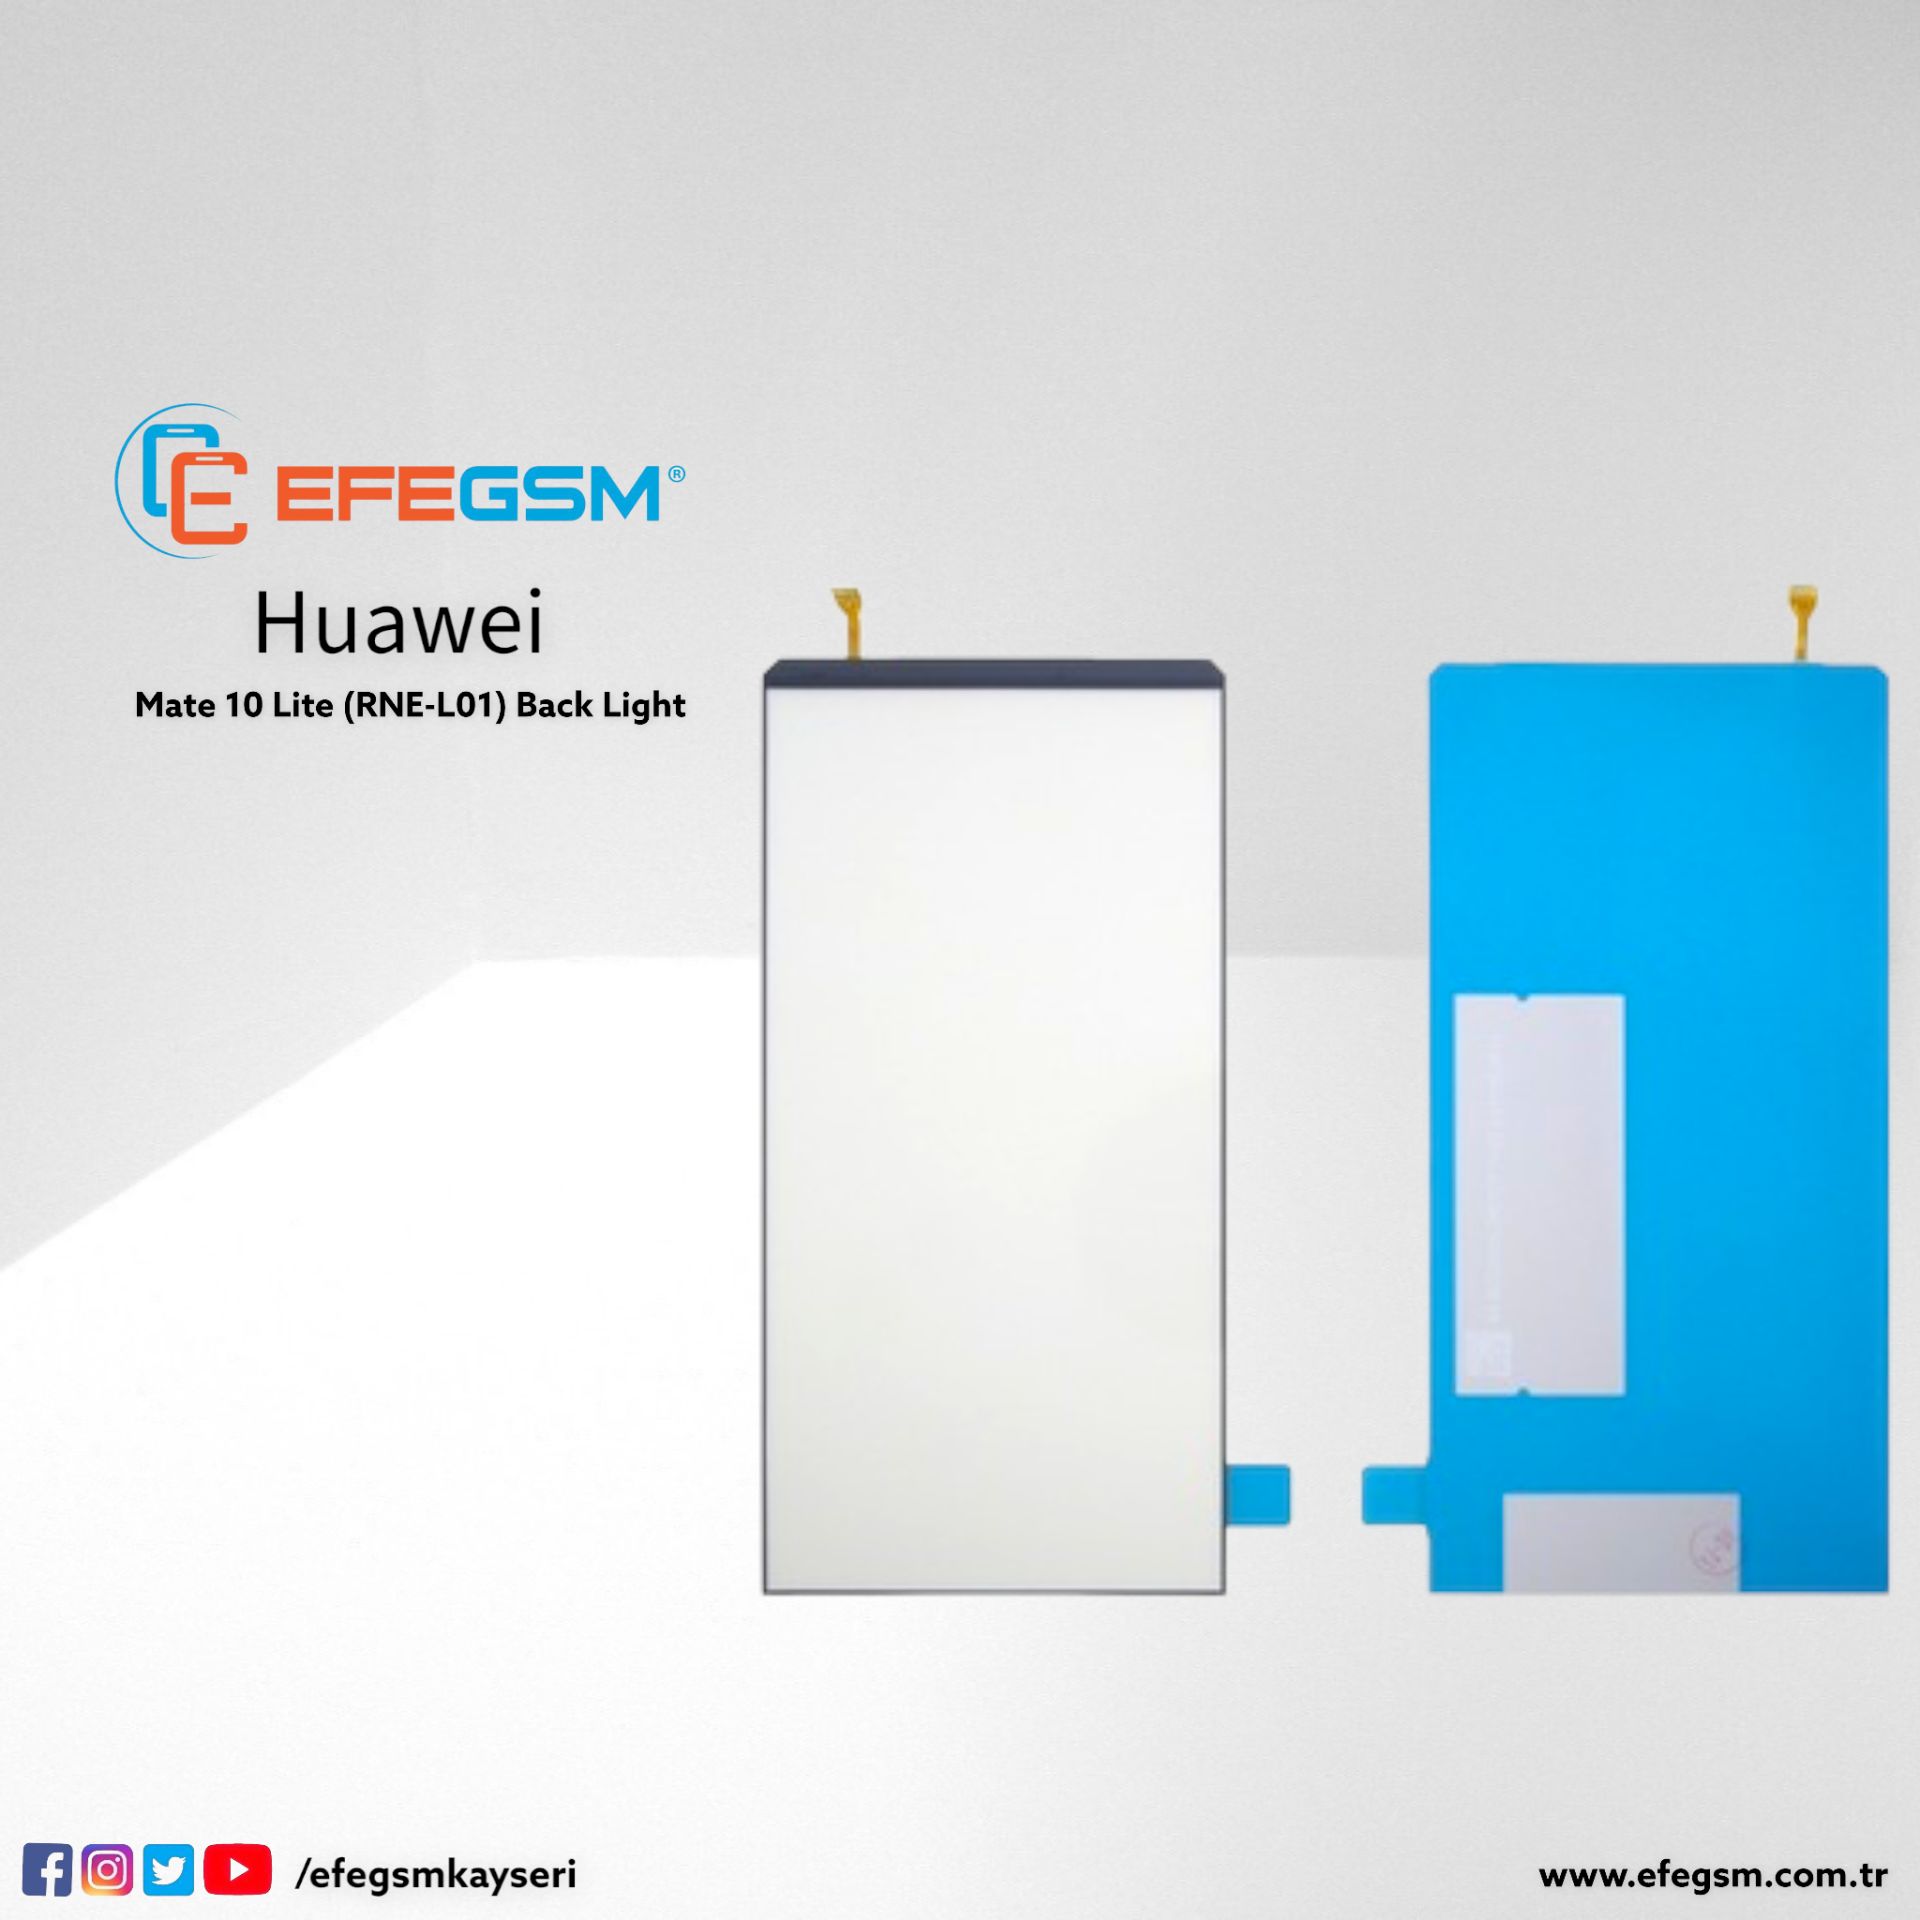 Huawei Mate 10 Lite (RNE-L01) Back Light